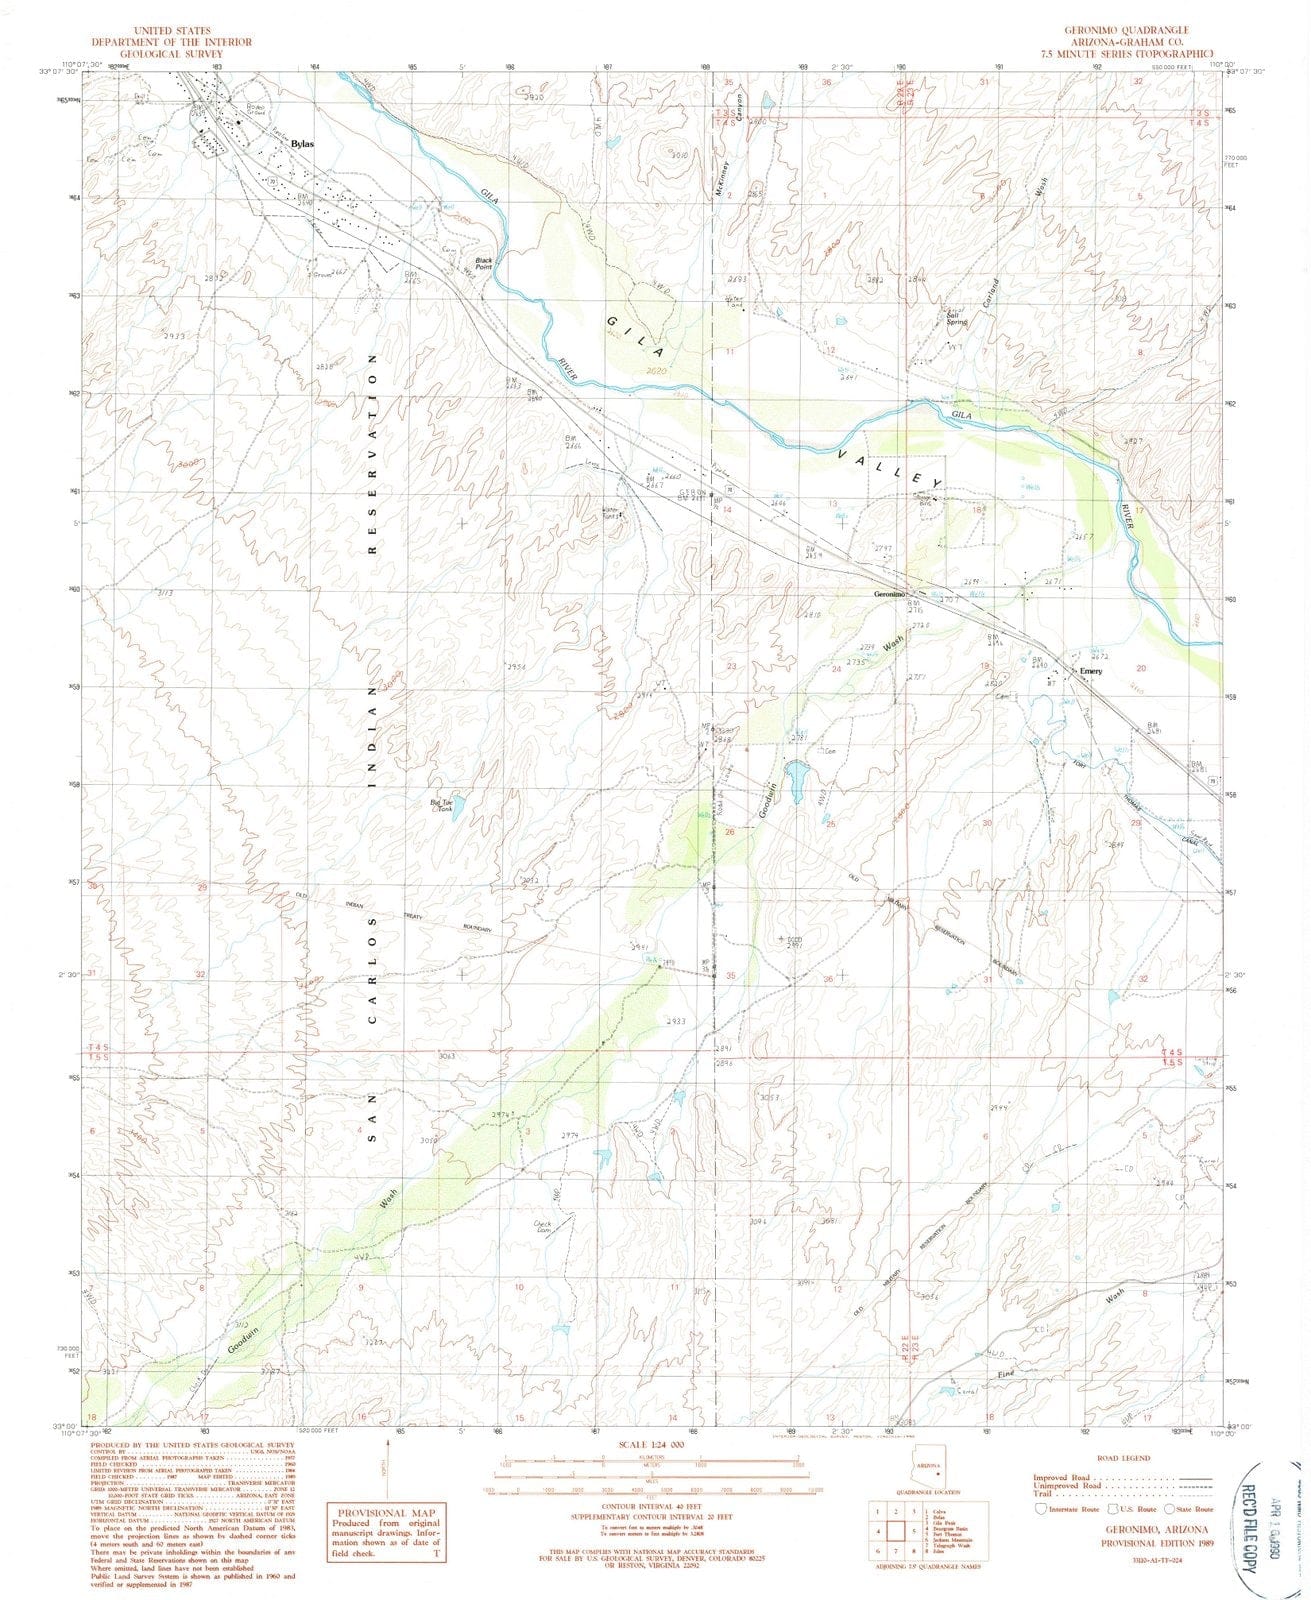 1989 Geronimo, AZ - Arizona - USGS Topographic Map